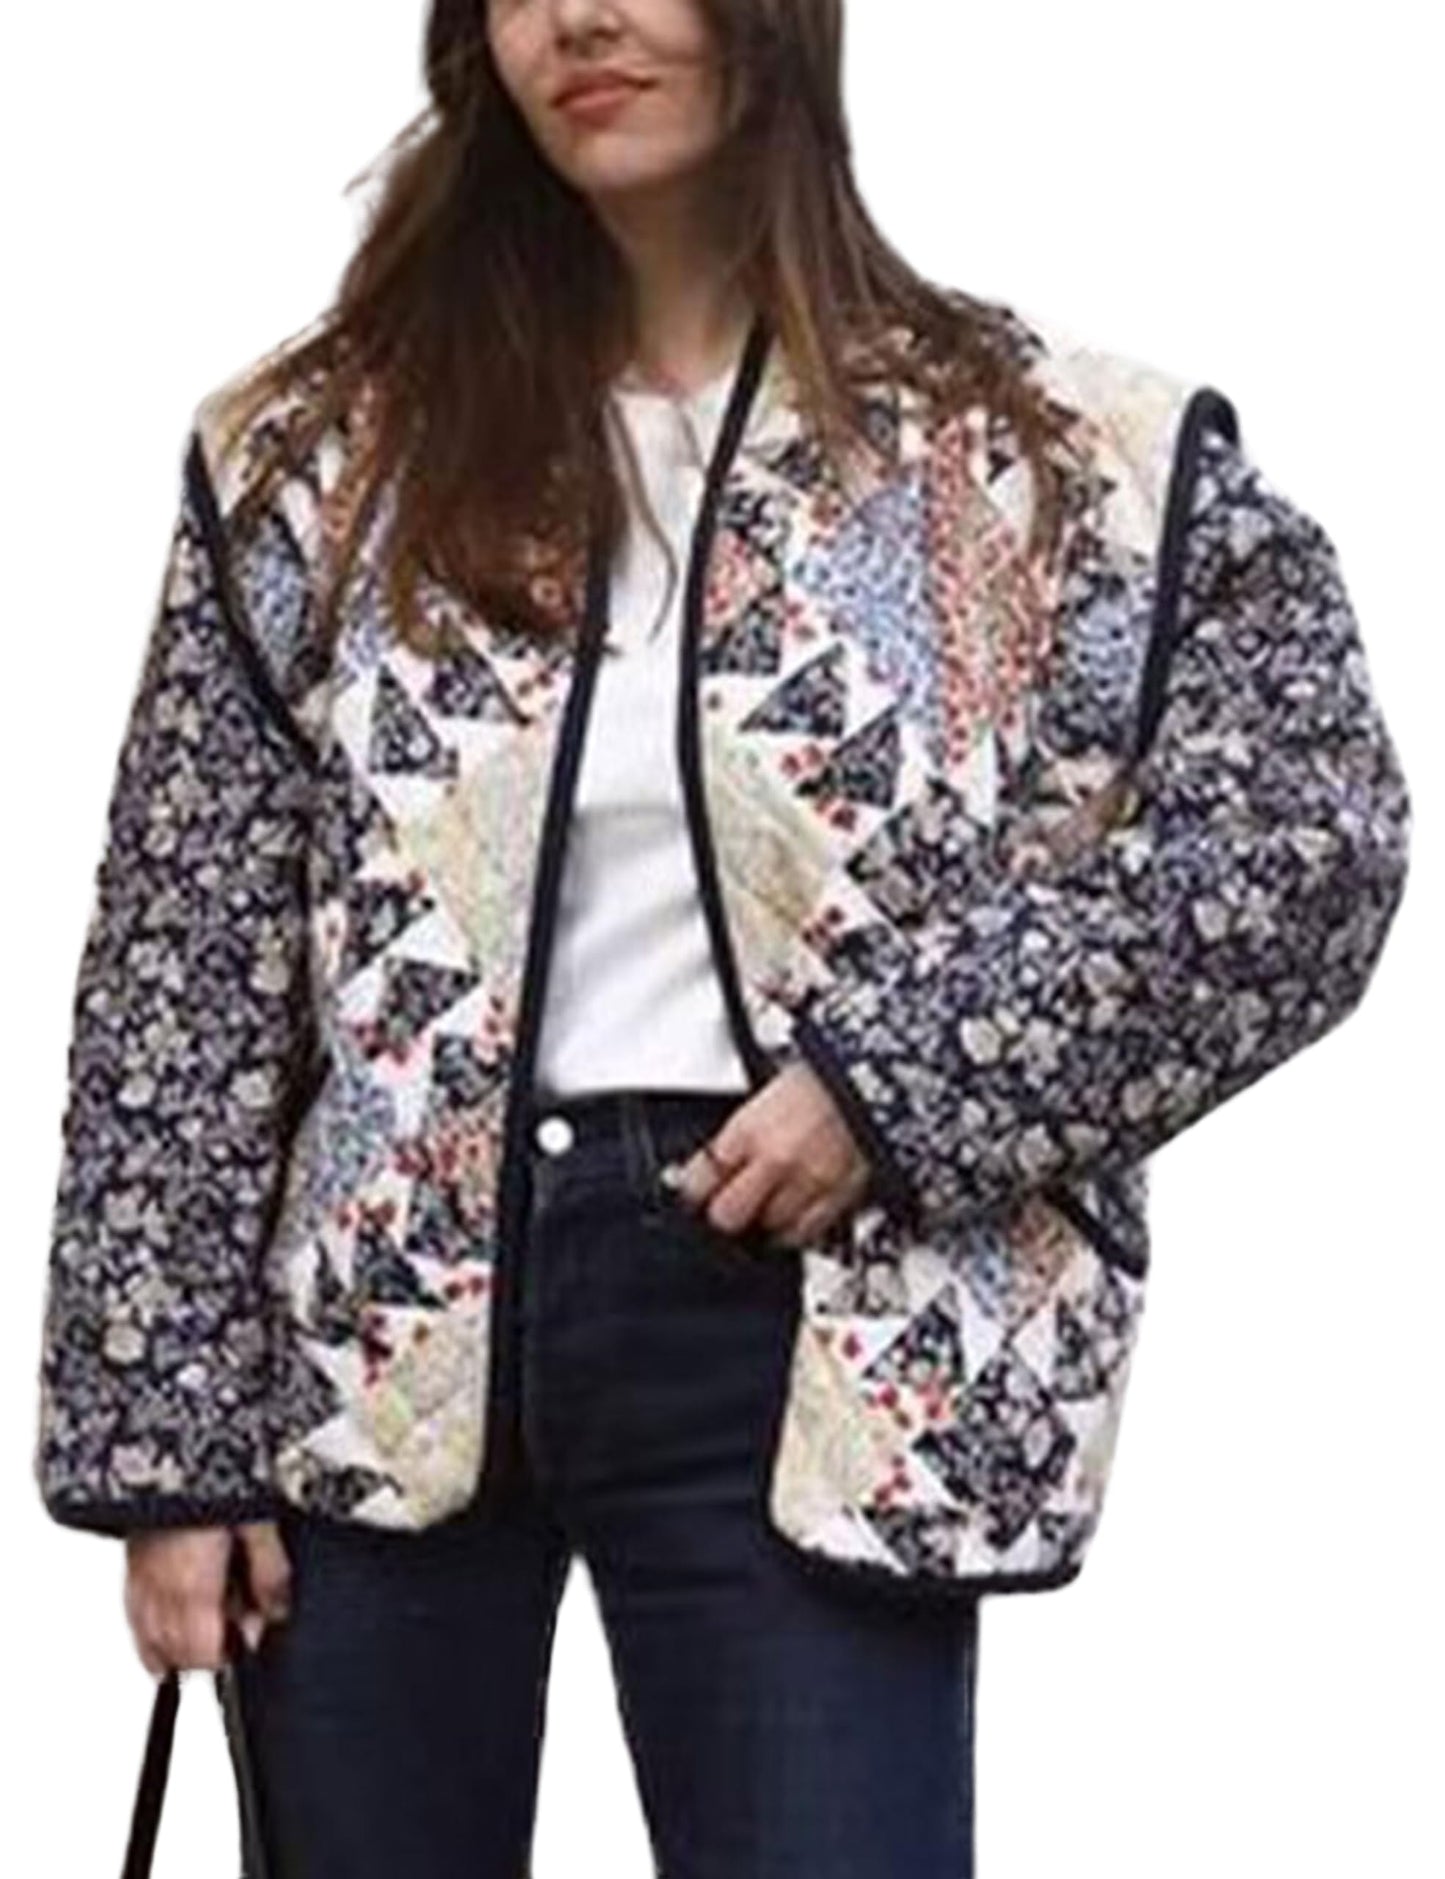 Omoone Lightweight Quilted Floral Jacket